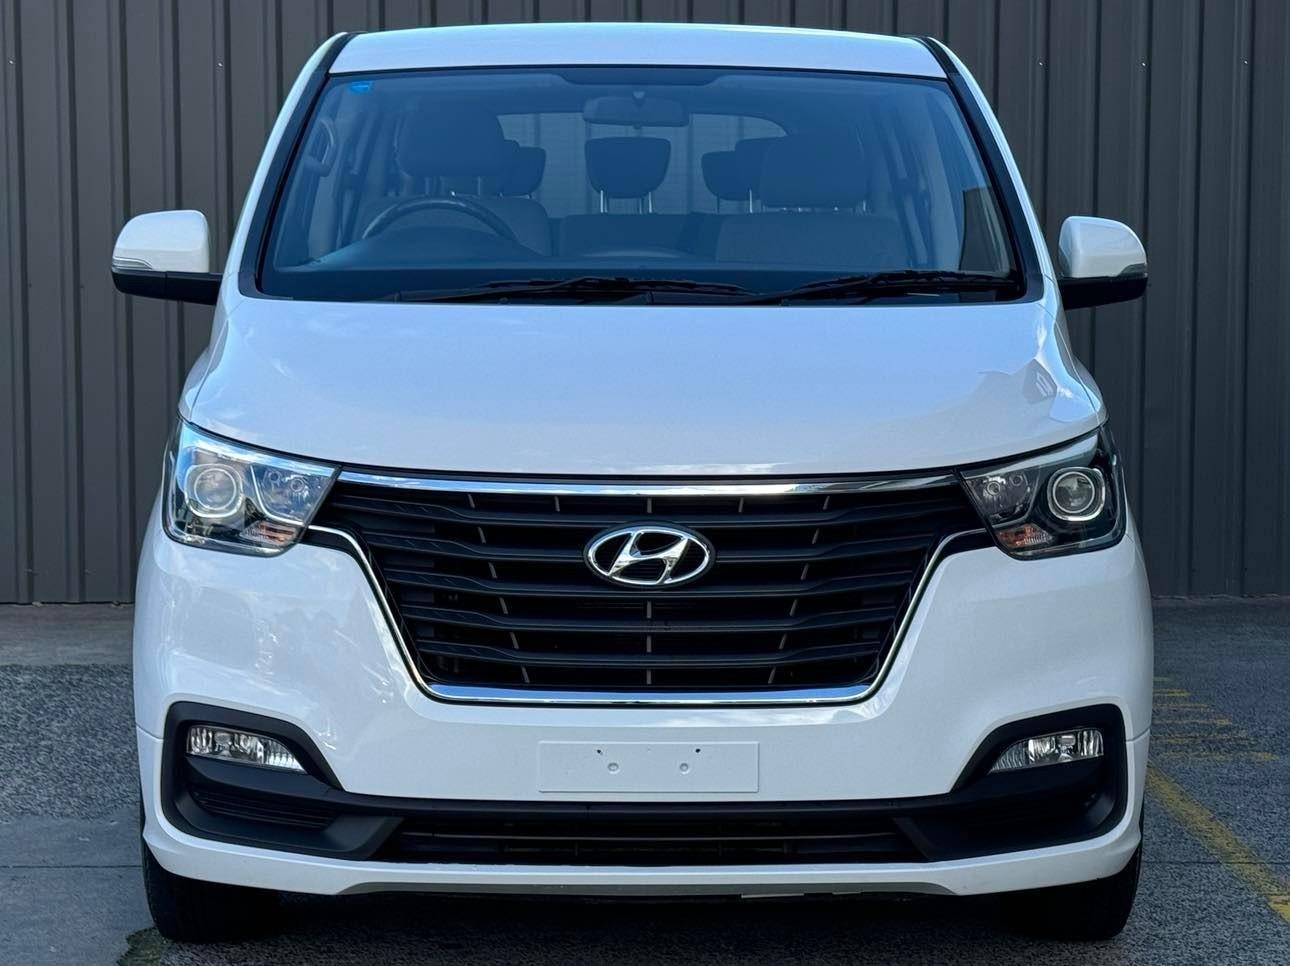 Hyundai Imax image 2